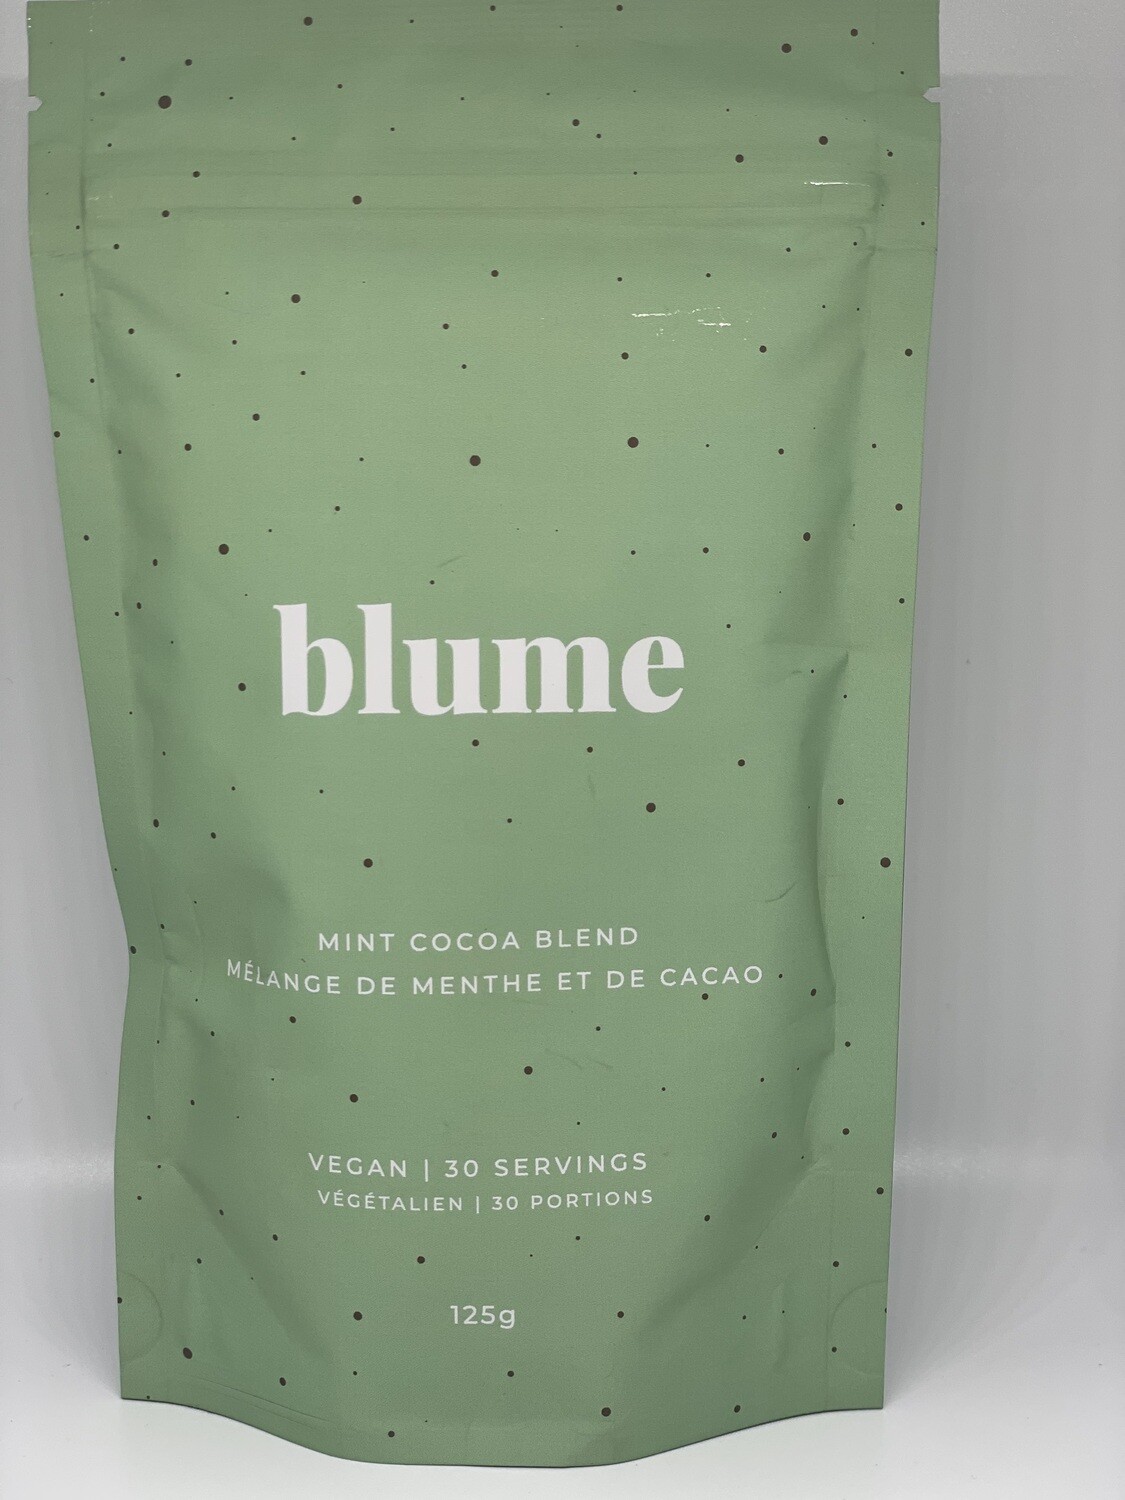 blume - Mint Cocoa Blend